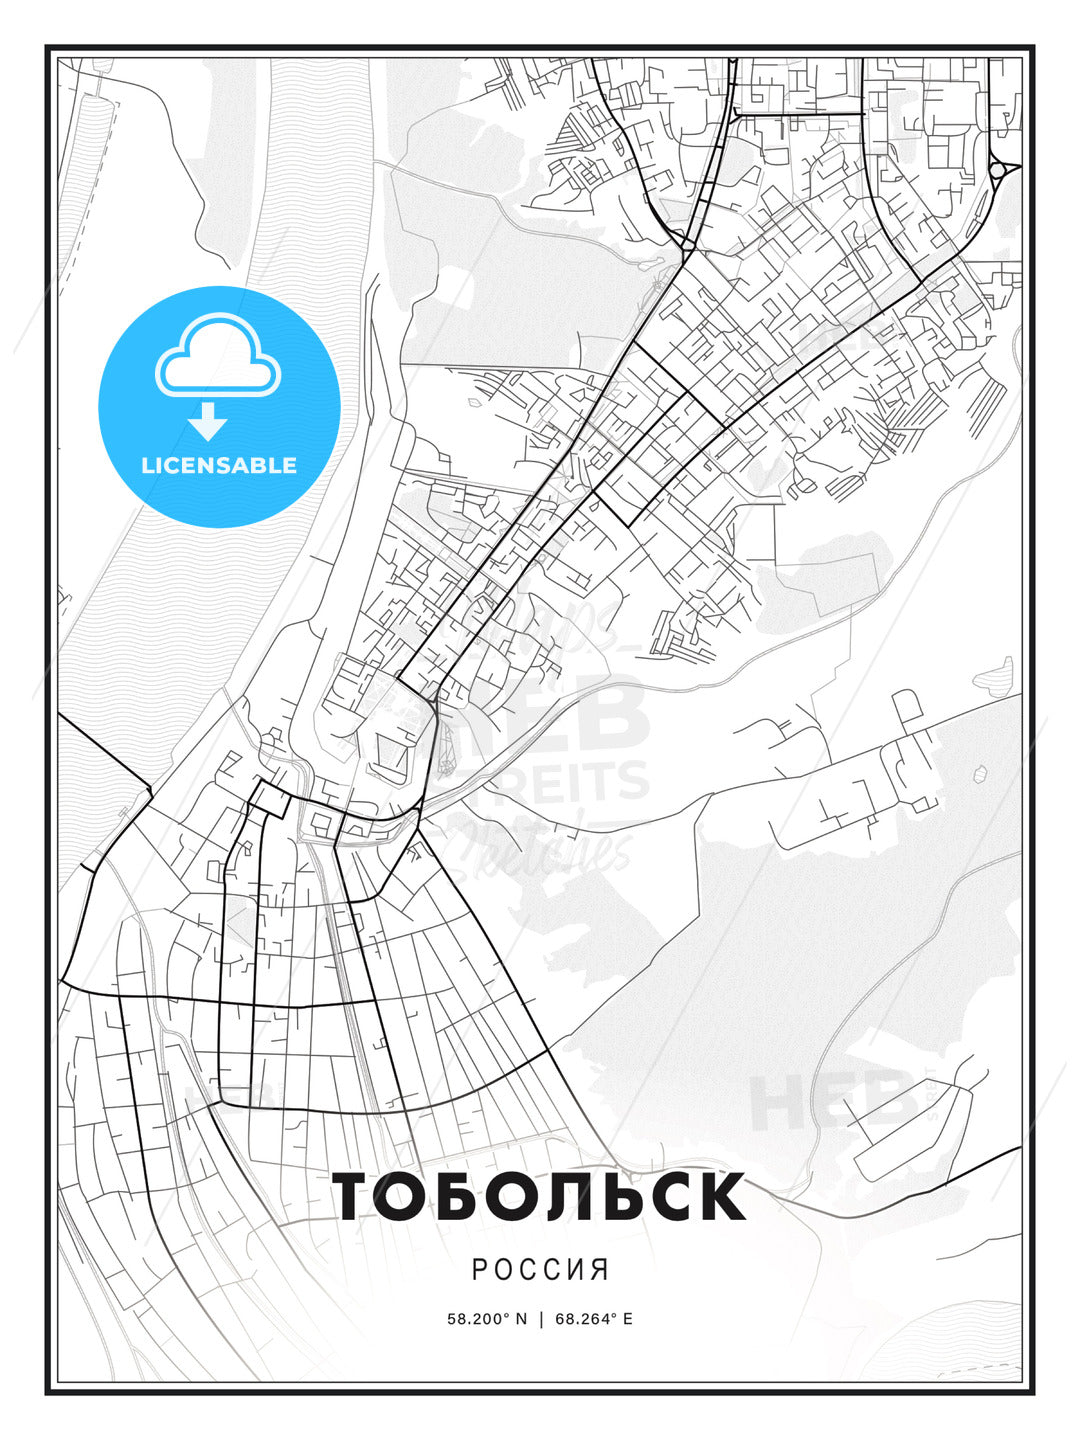 ТОБОЛЬСК / Tobolsk, Russia, Modern Print Template in Various Formats - HEBSTREITS Sketches